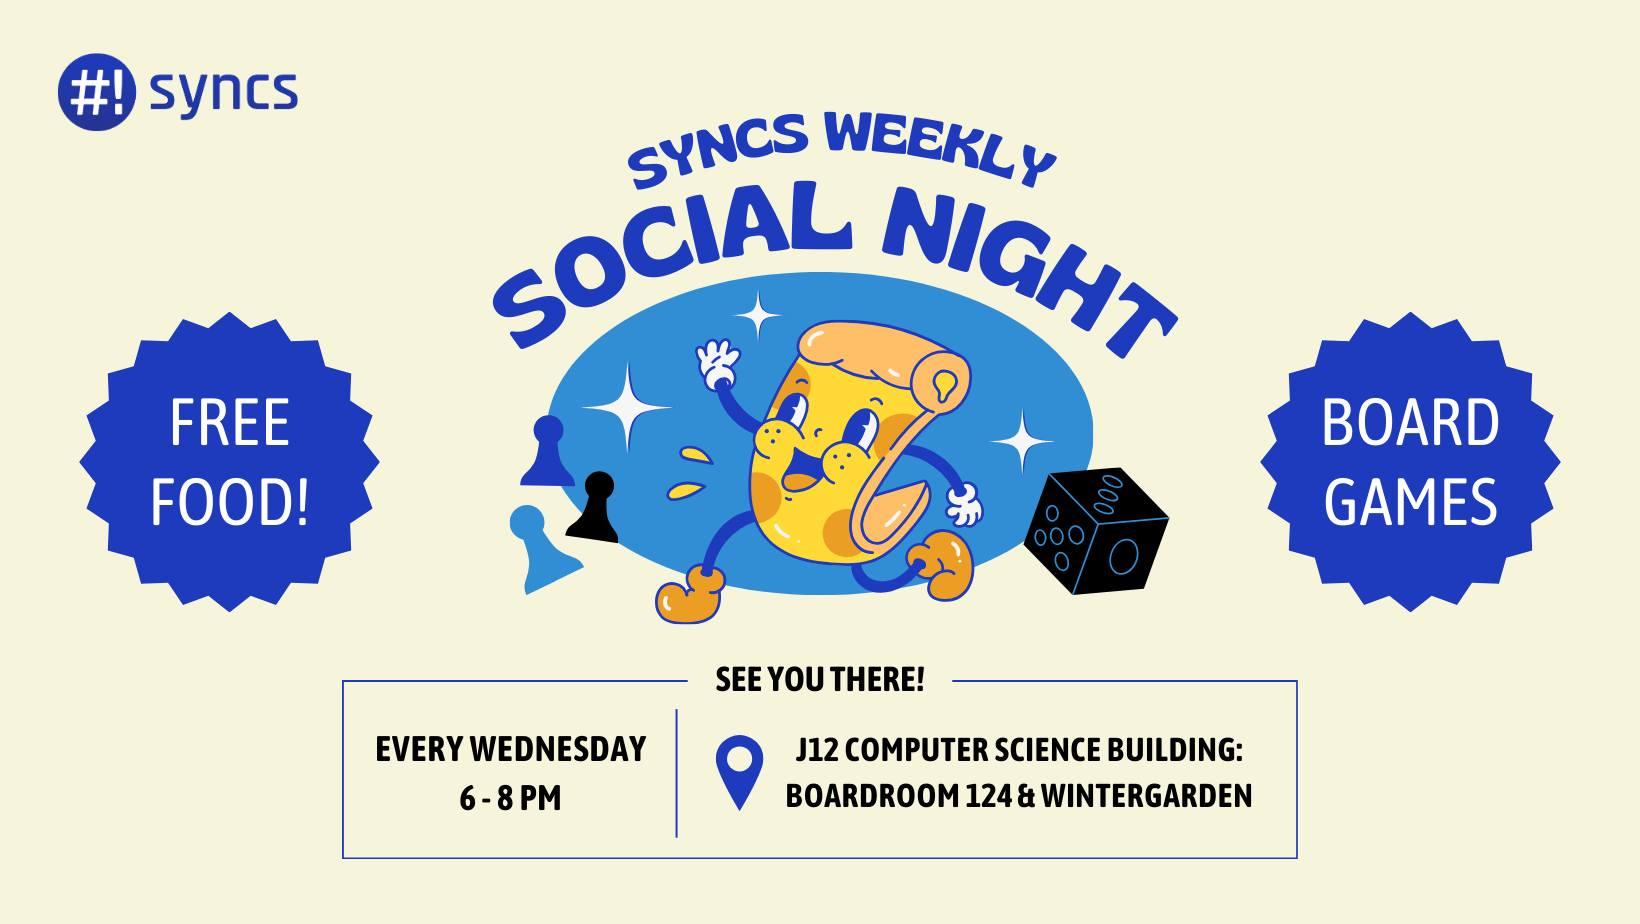 Weekly Social Night image